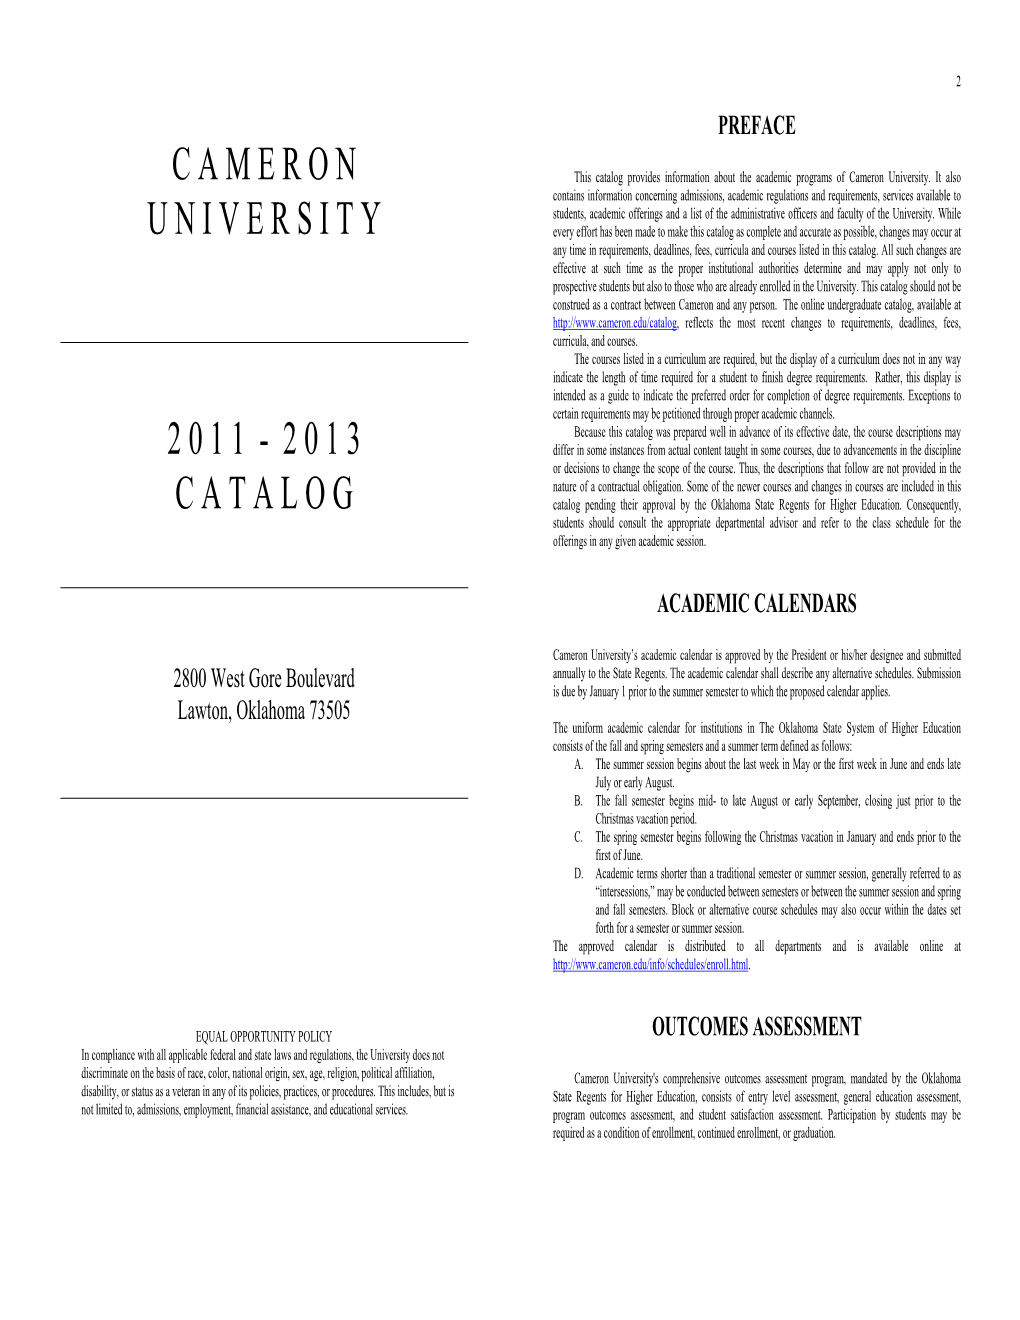 Cameron University Undergraduate Catalog 2011-2013